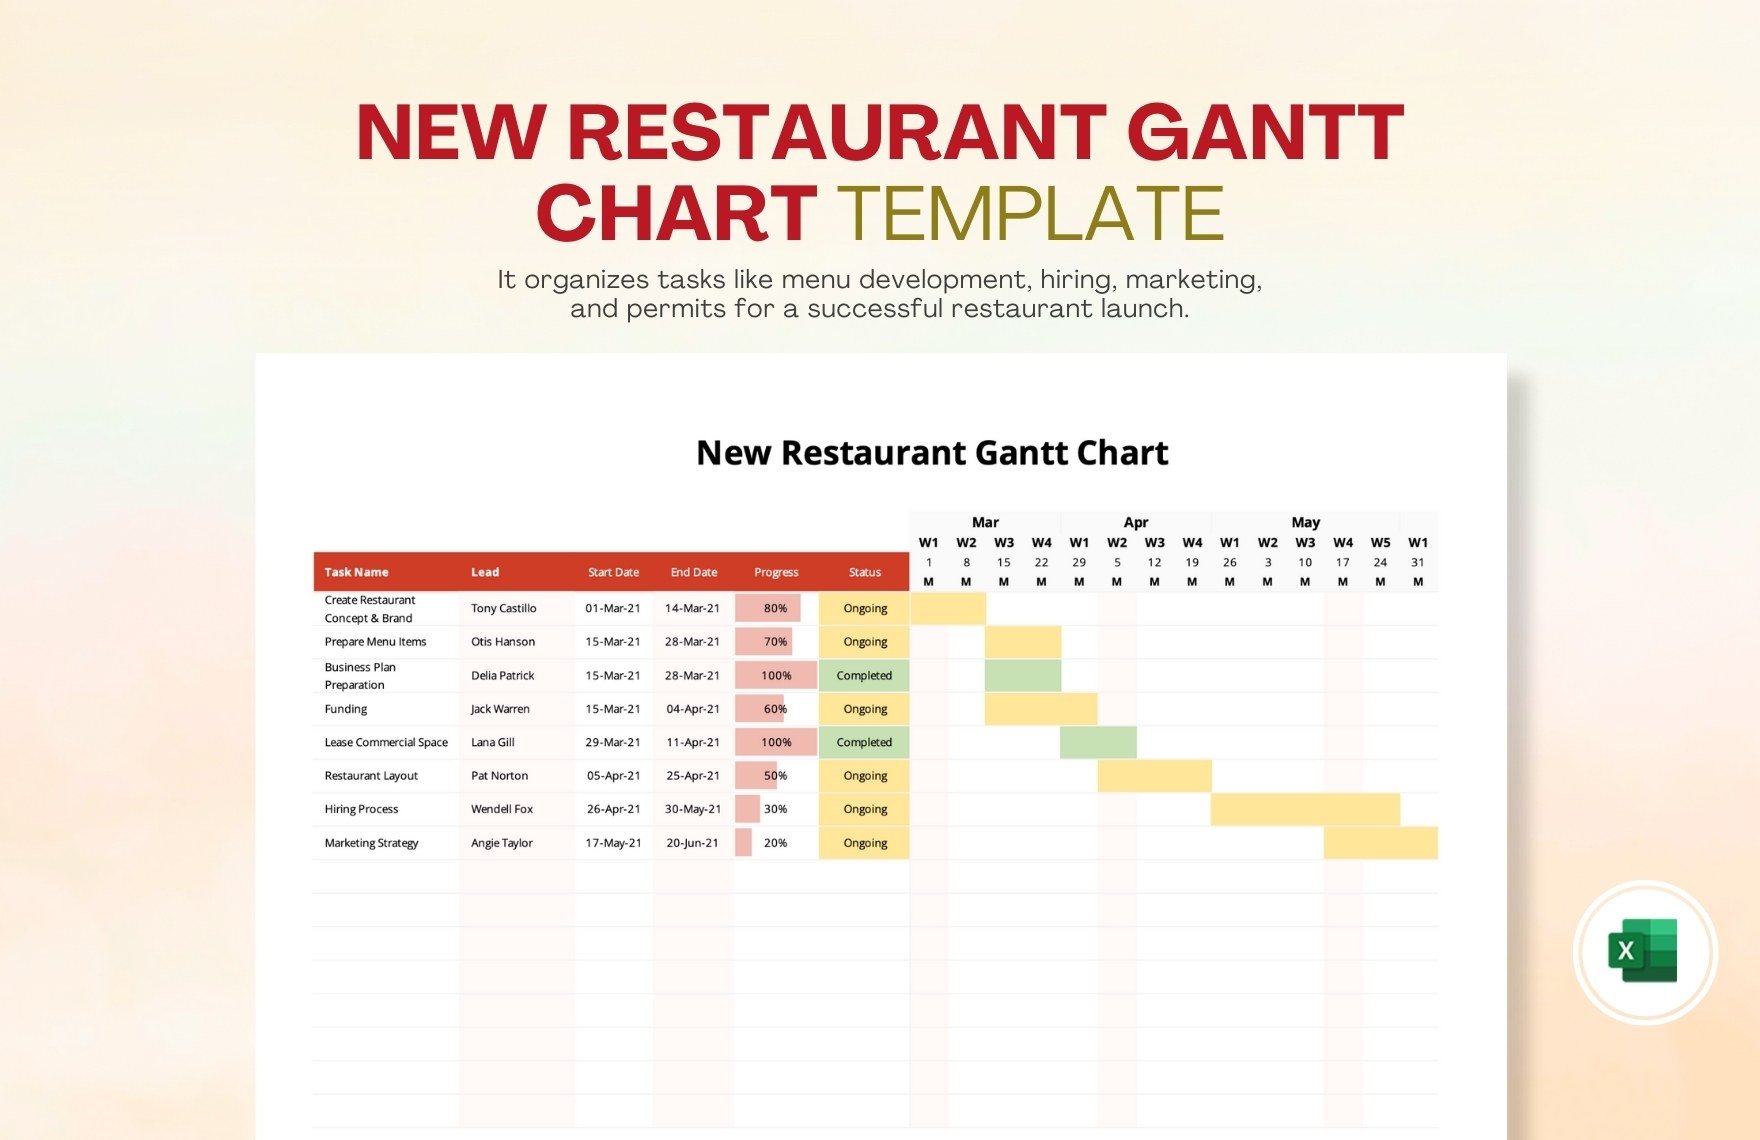 New Restaurant Gantt Chart Template in Excel